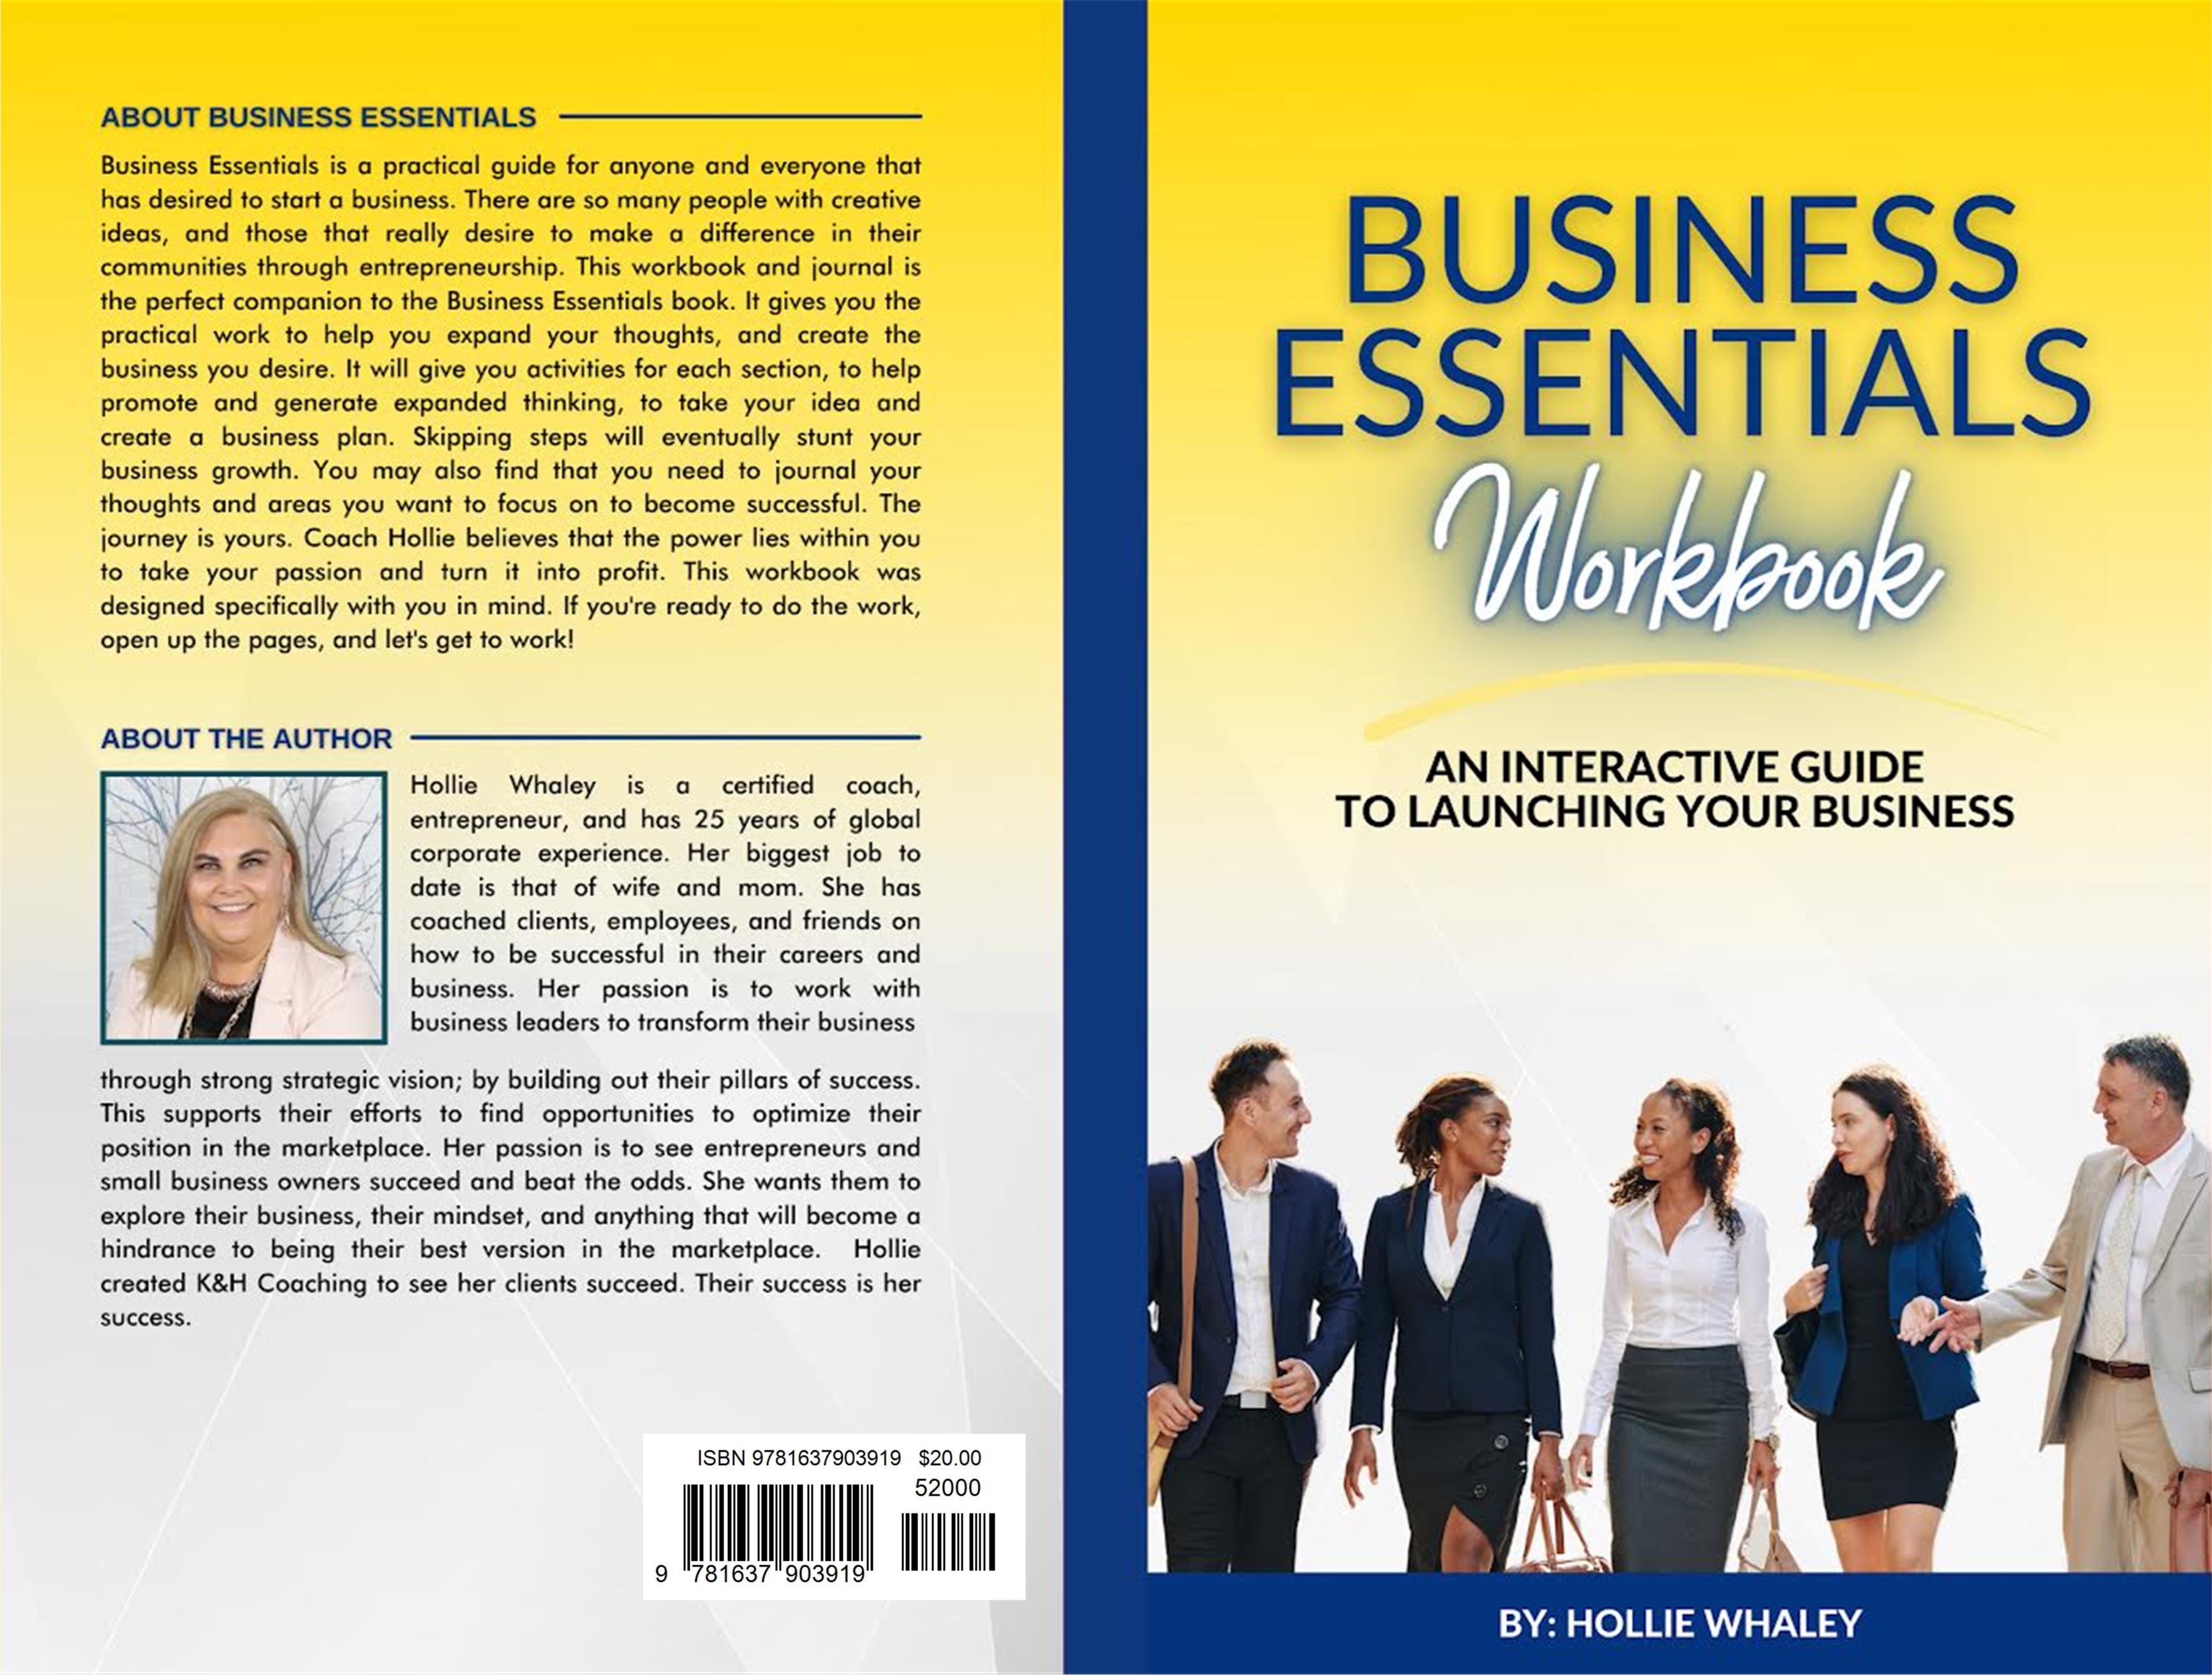 Business Essentials Workbook cover image